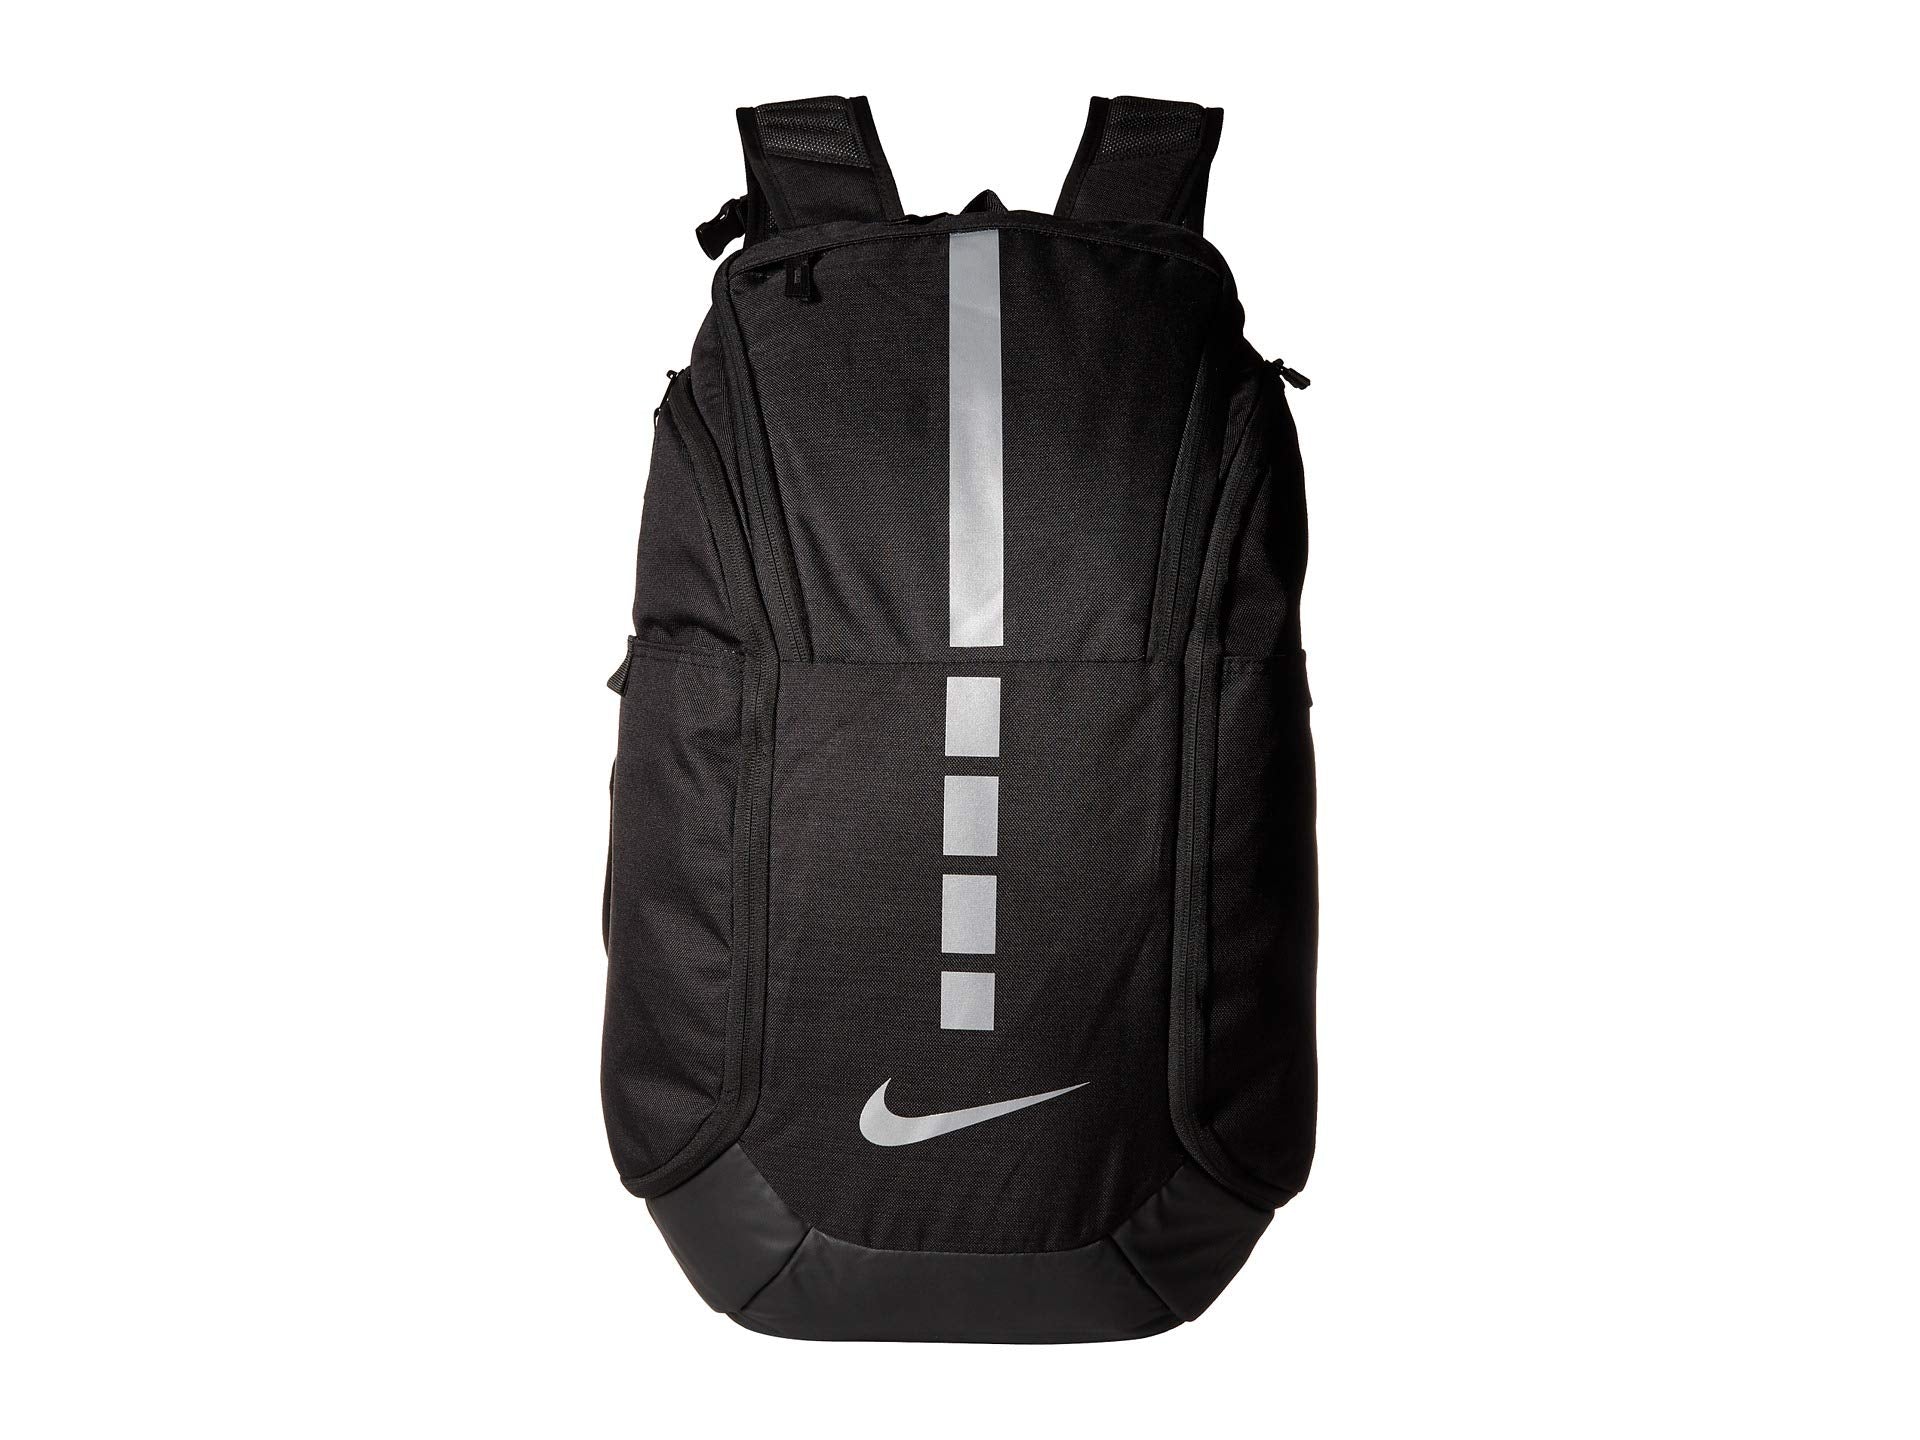 Nike Hoops Elite Pro Grey/Silver Basketball Backpack BA5554-022 NWT